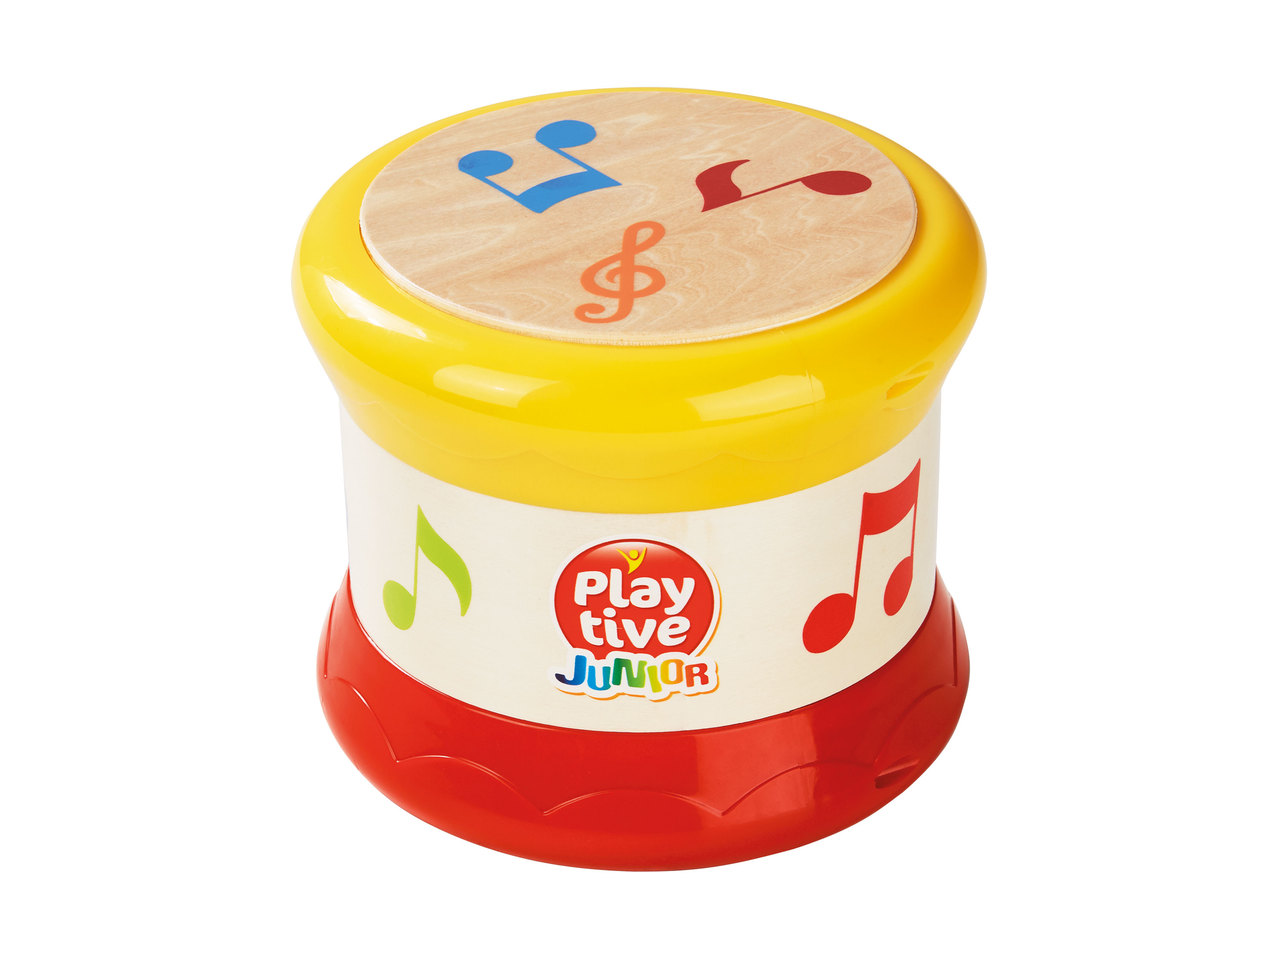 Playtive Junior Kids' Musical Instrument1